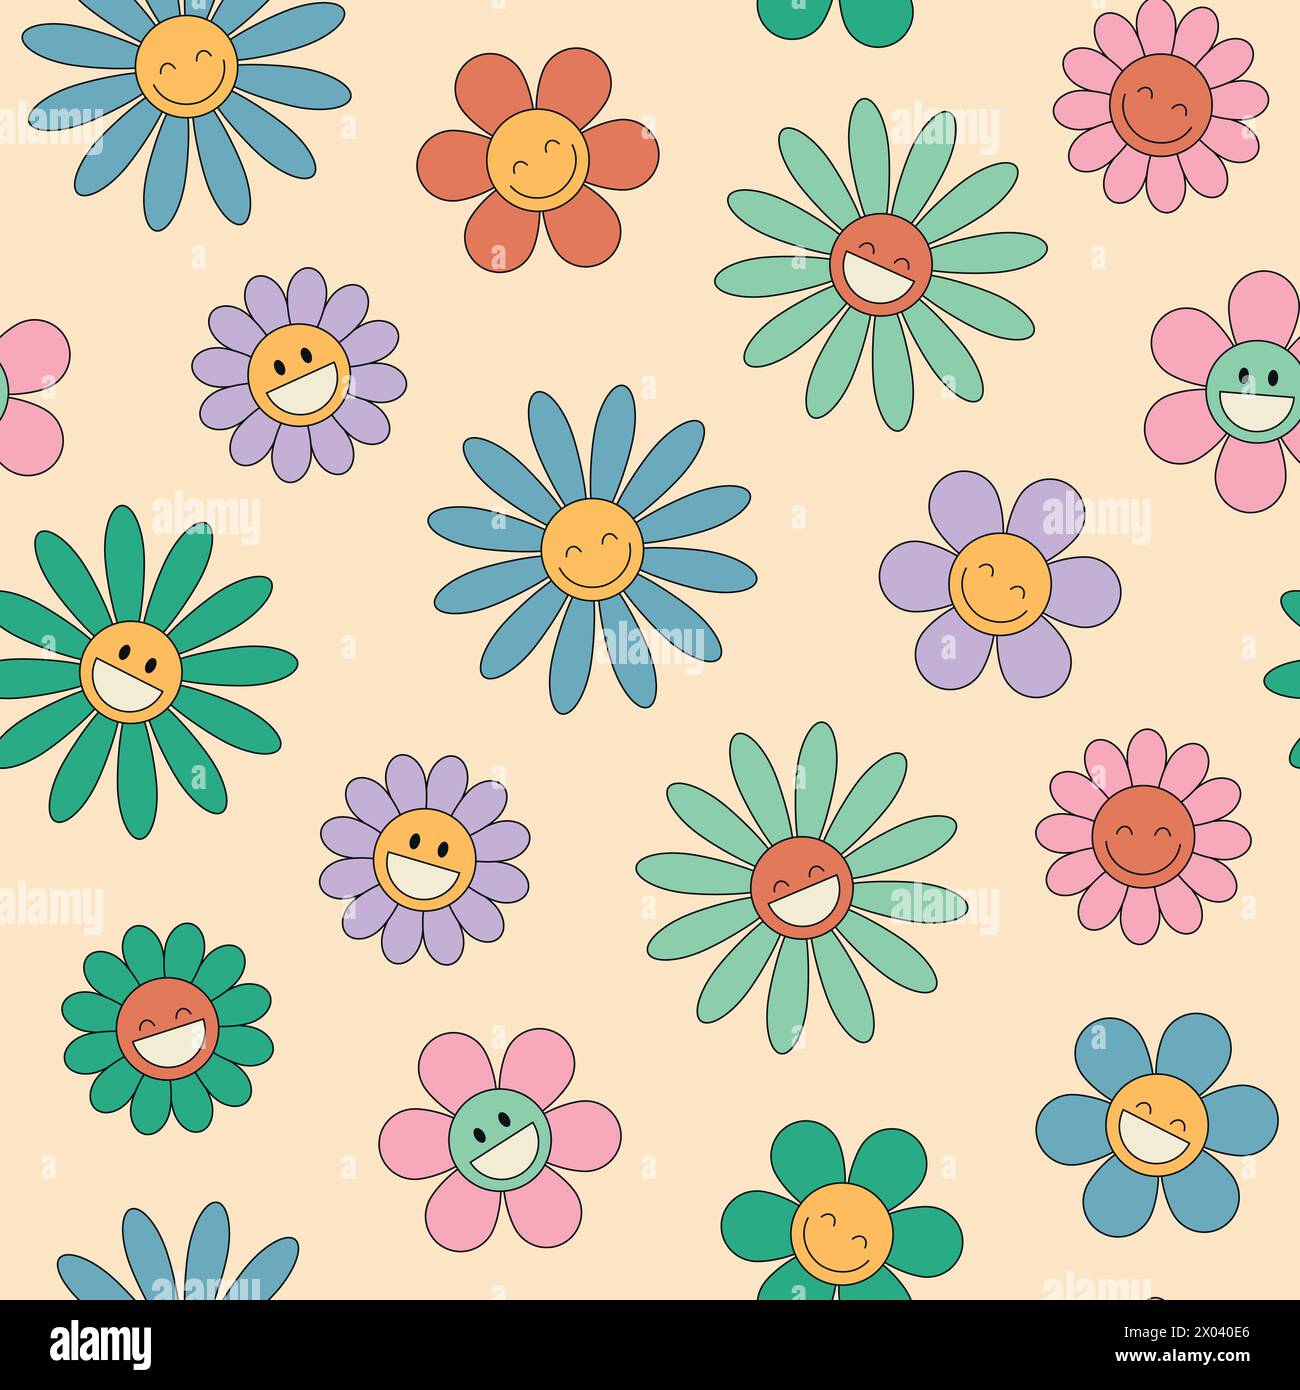 Groovy daisy flower seamless pattern. Hippie retro style. Flower icons. Vector illustration Stock Vector